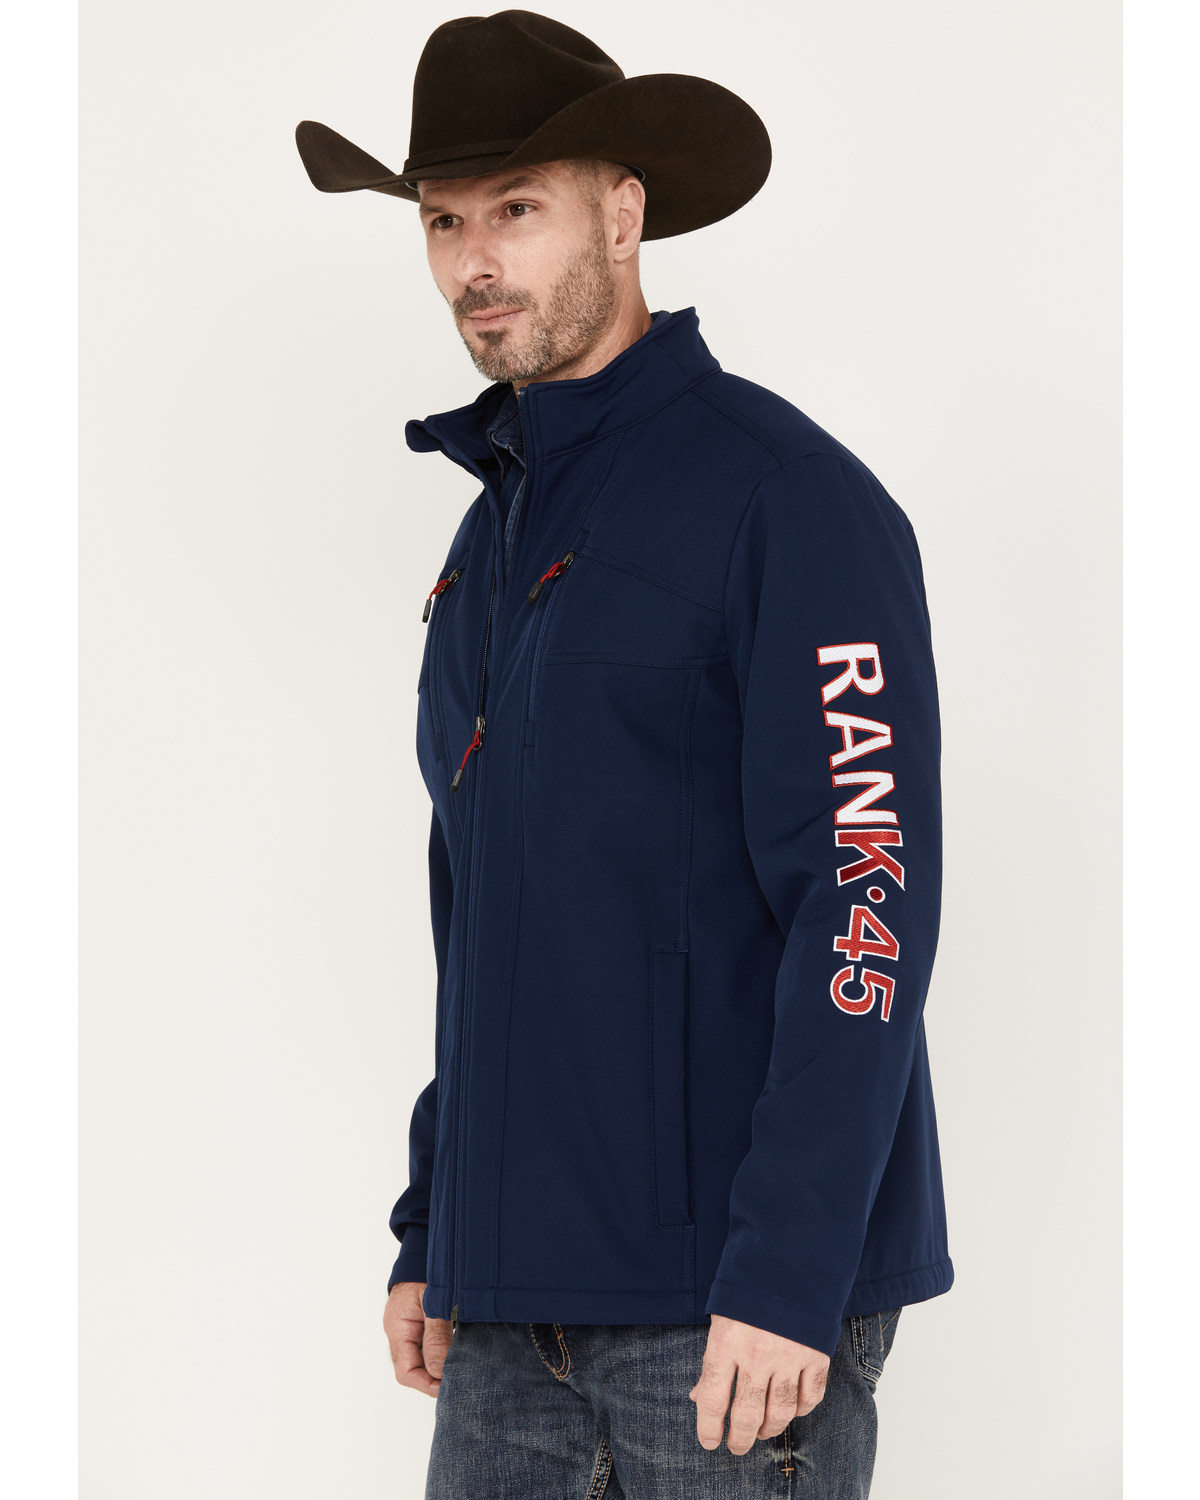 RANK 45® Men's Arlington Embroidered Softshell Jacket